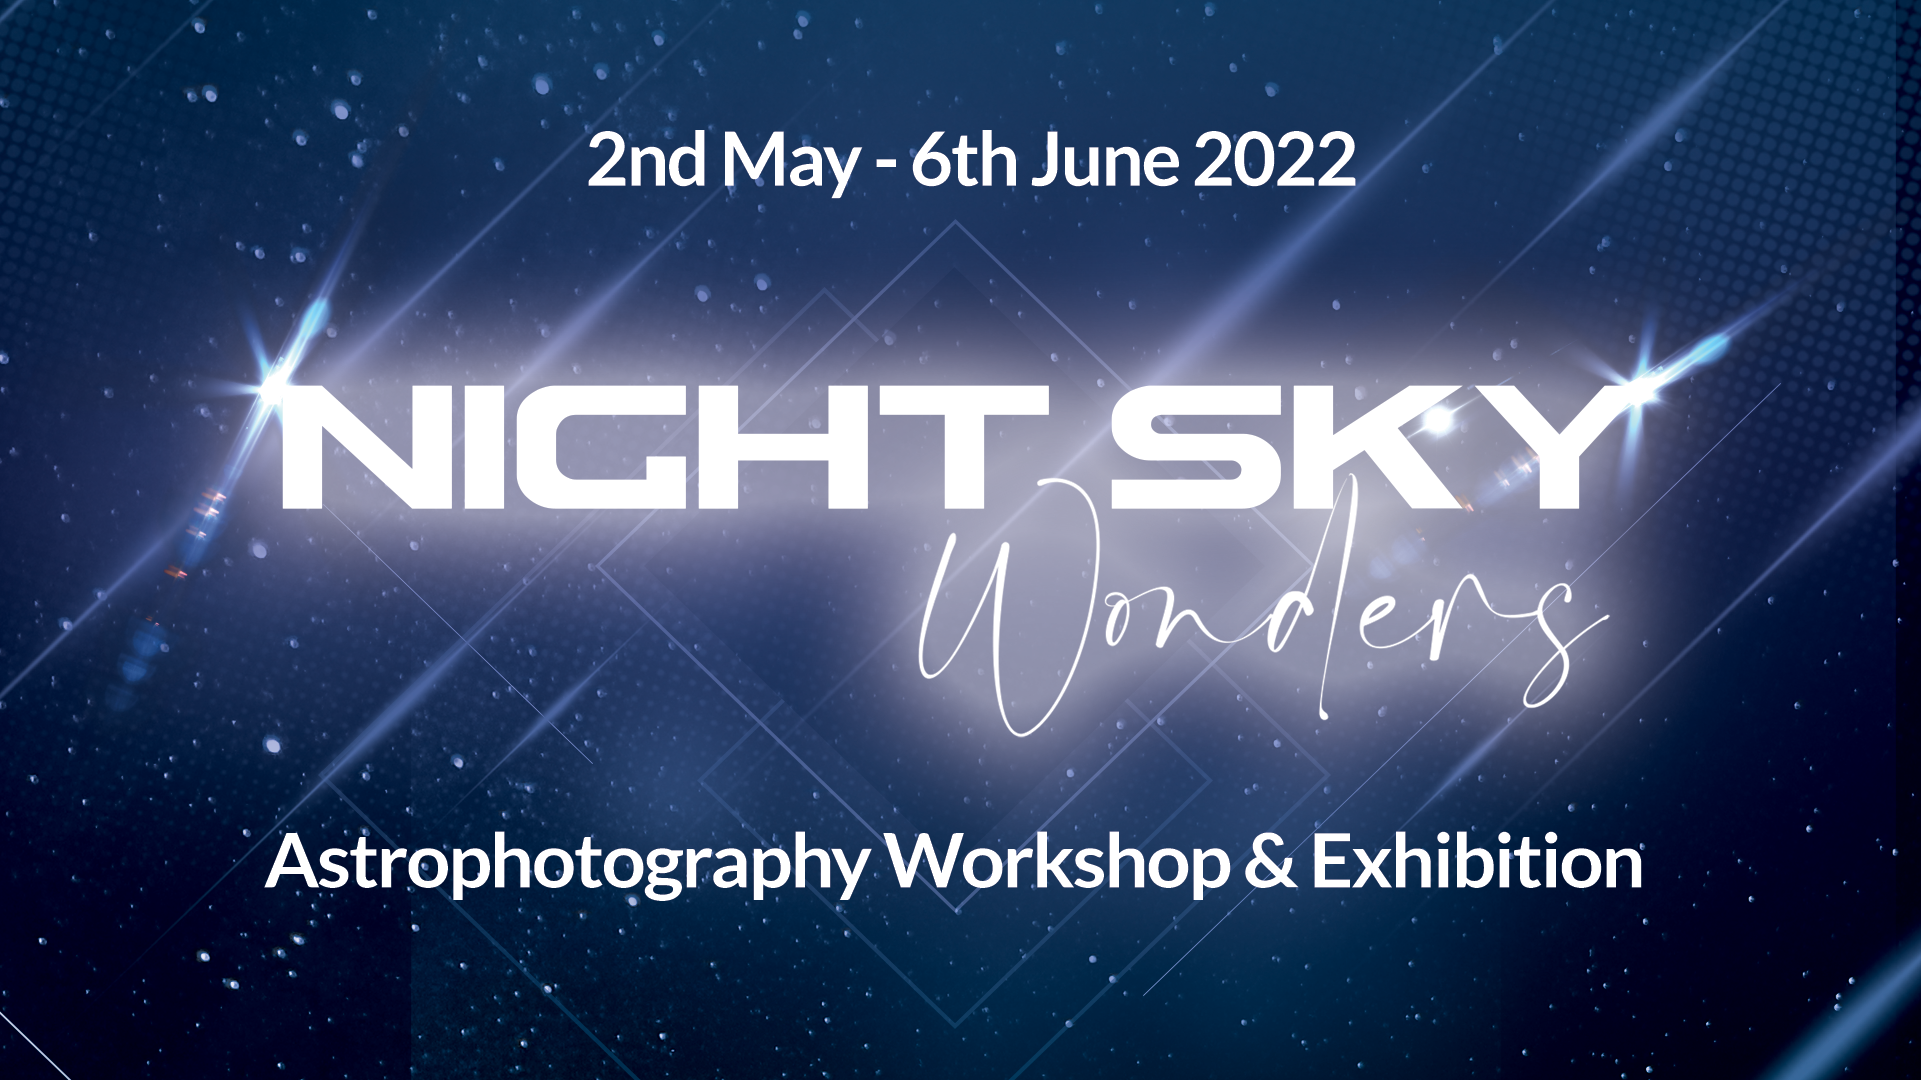 Night Sky Wonders Astrophotography Workshop & Exhibition | 4th June